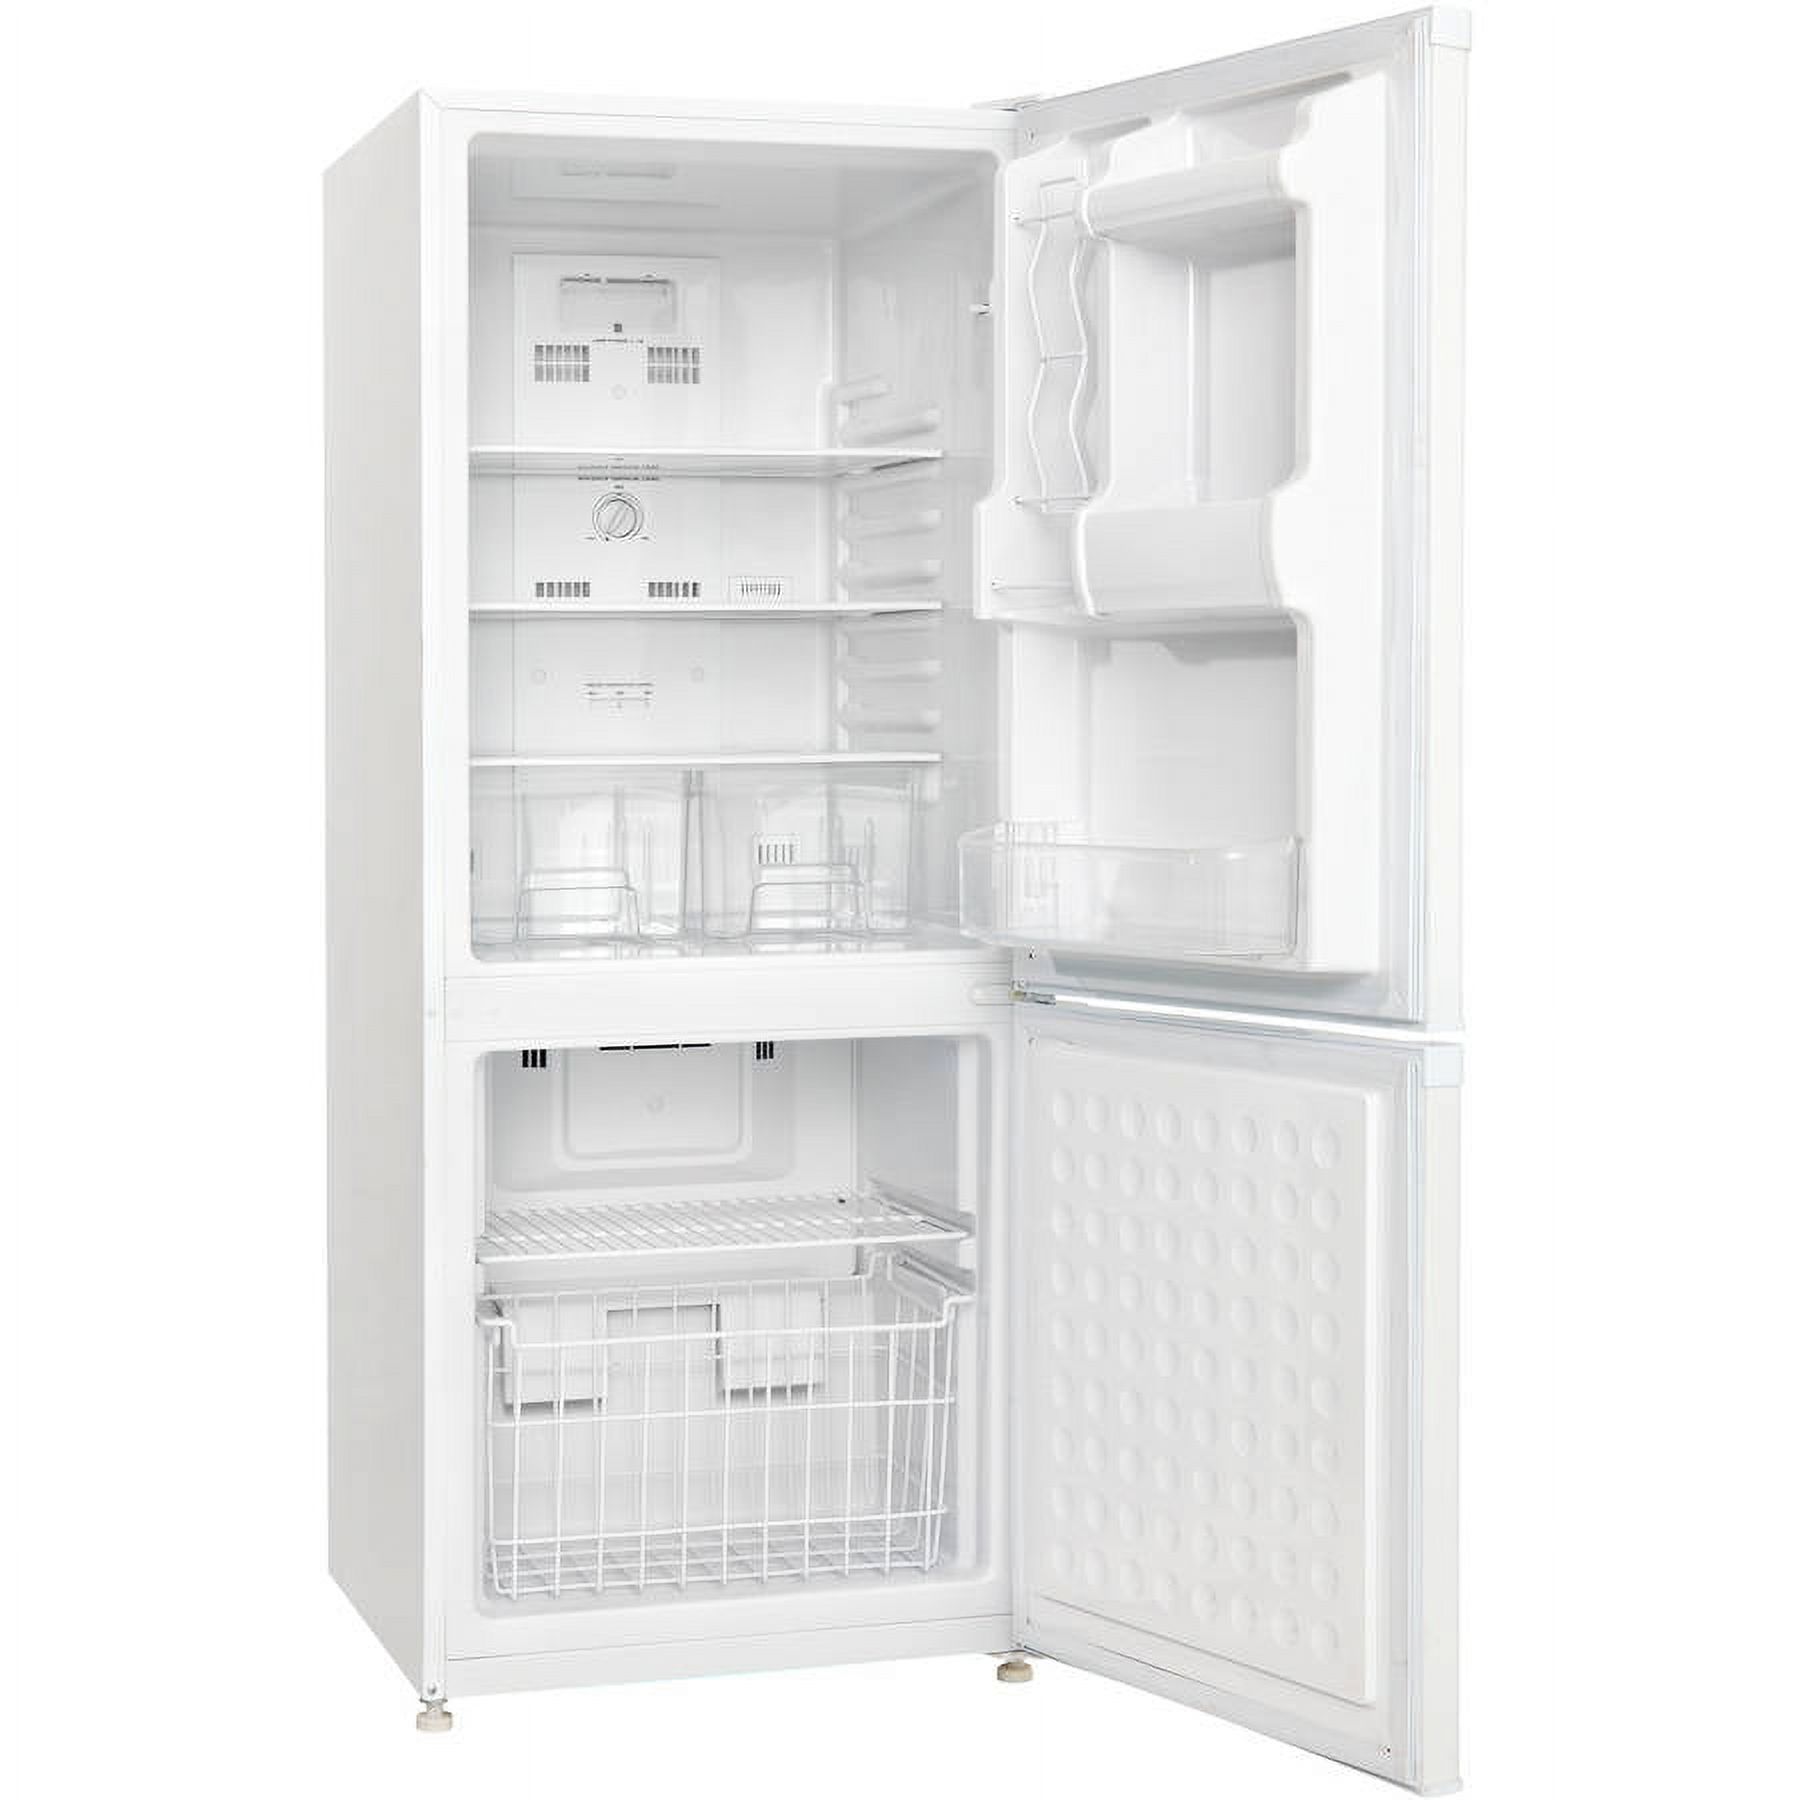 Danby 9.2 Cu Ft Bottom Mount Refrigerator, White - image 3 of 5